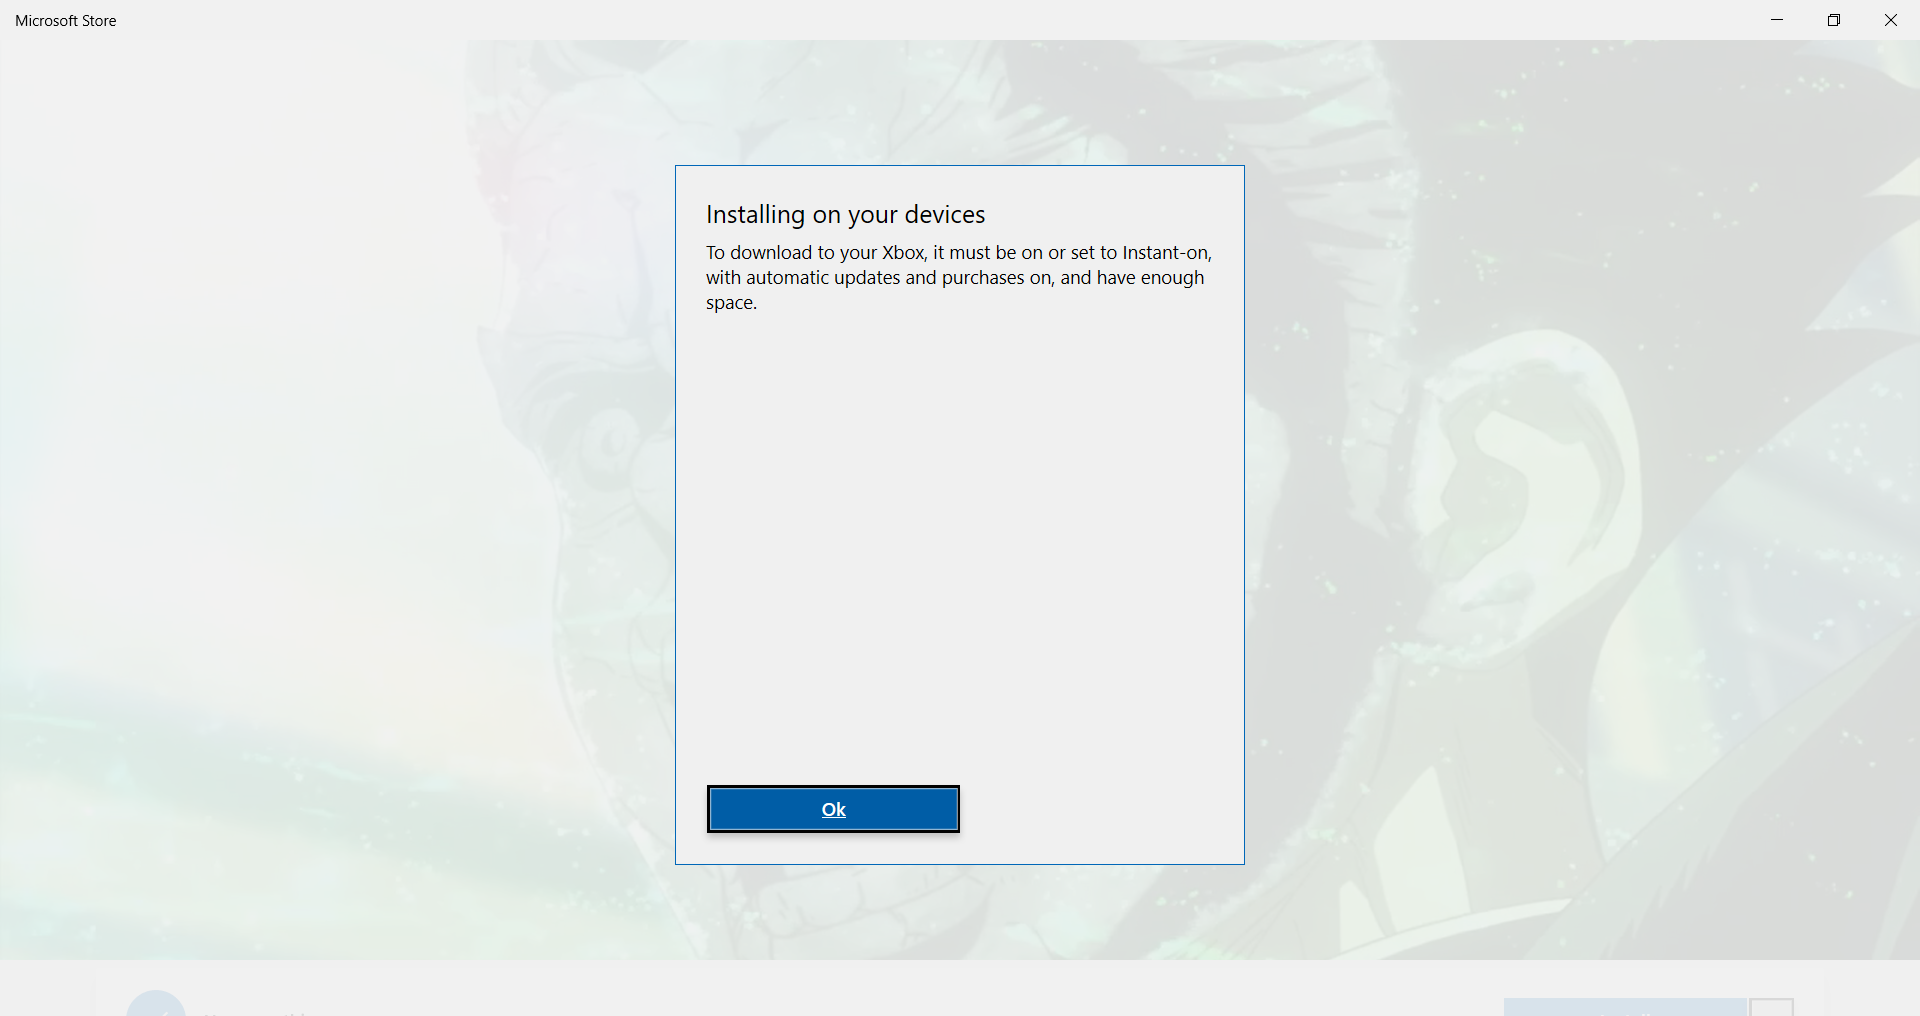 Microsoft Store not installing 40059e10-5cc1-4a77-8e42-d8032fc9886b?upload=true.png